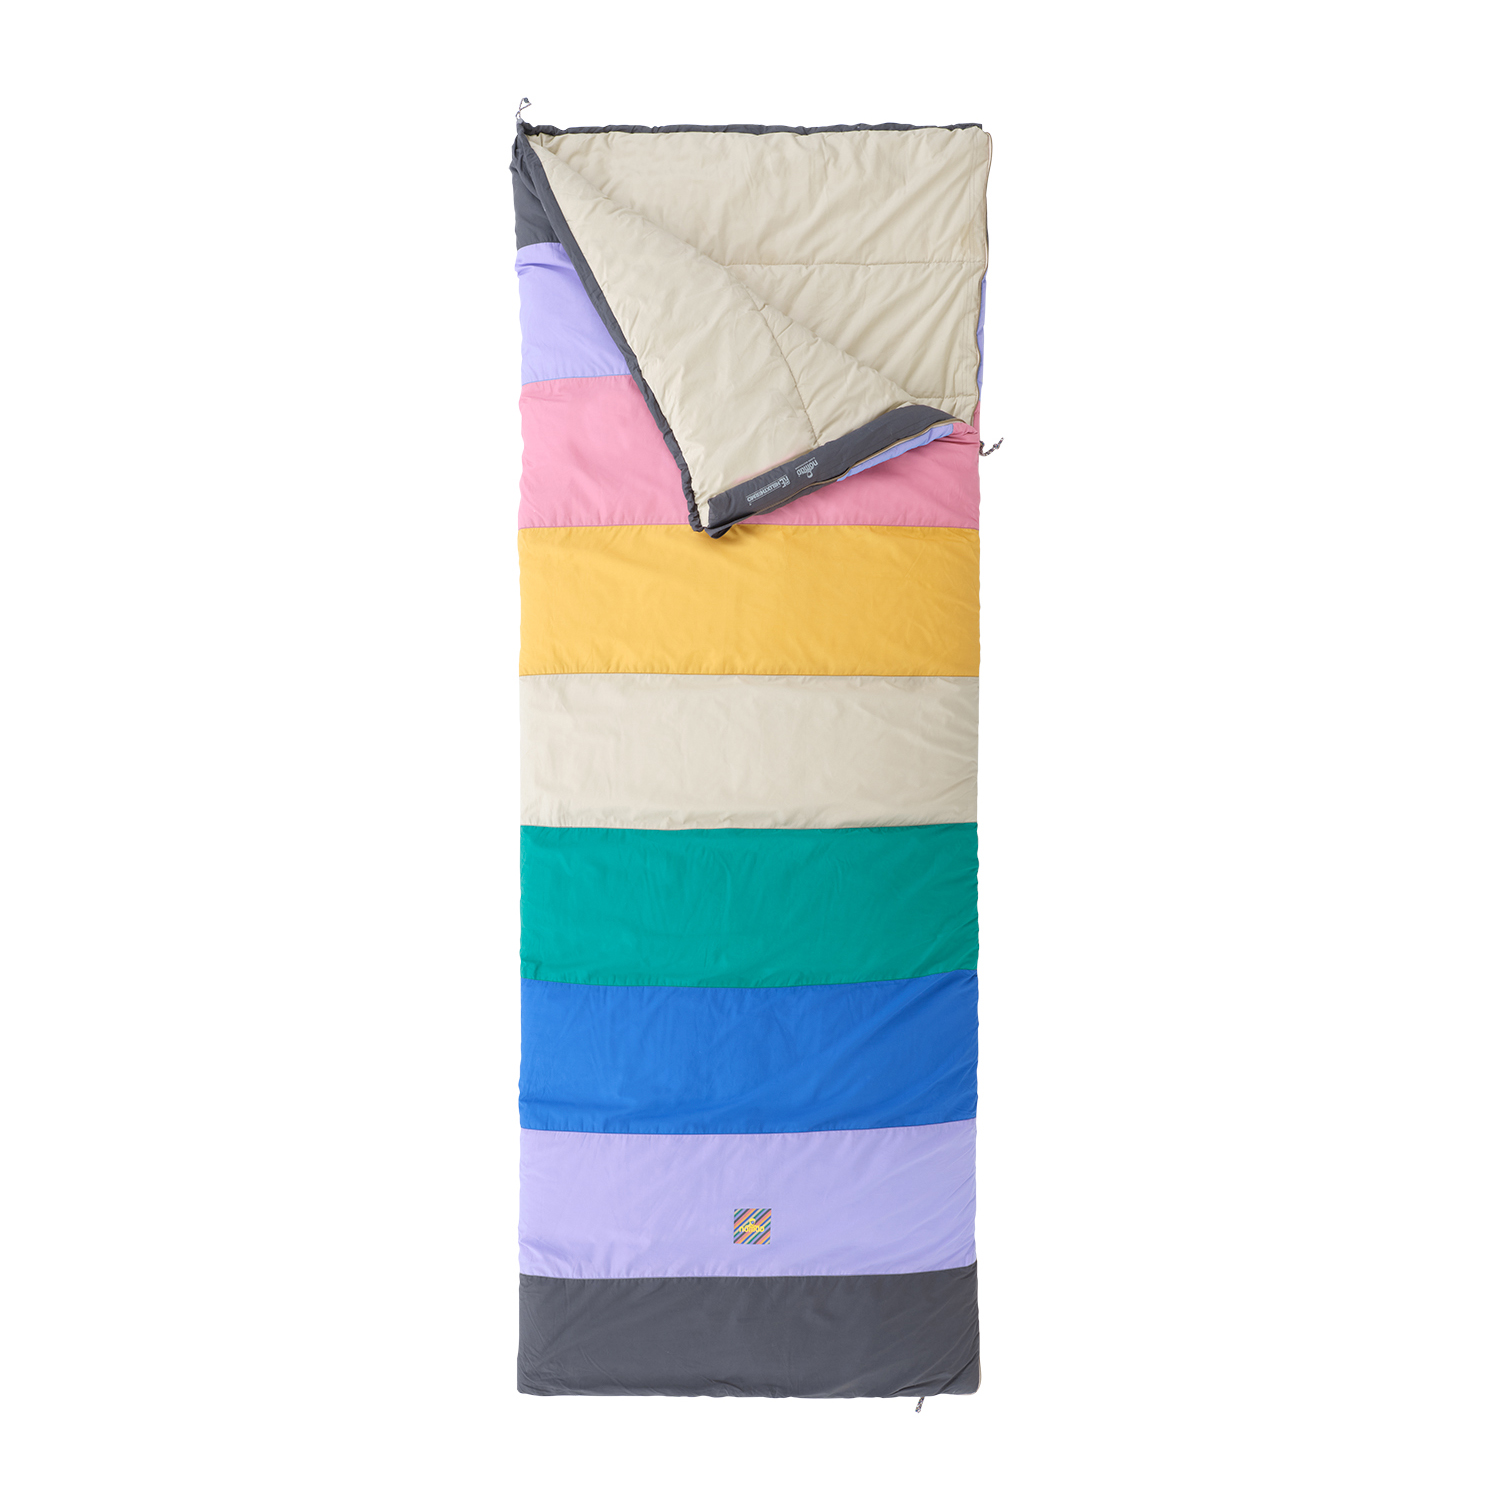 Blazer Multicolour Sleeping bag